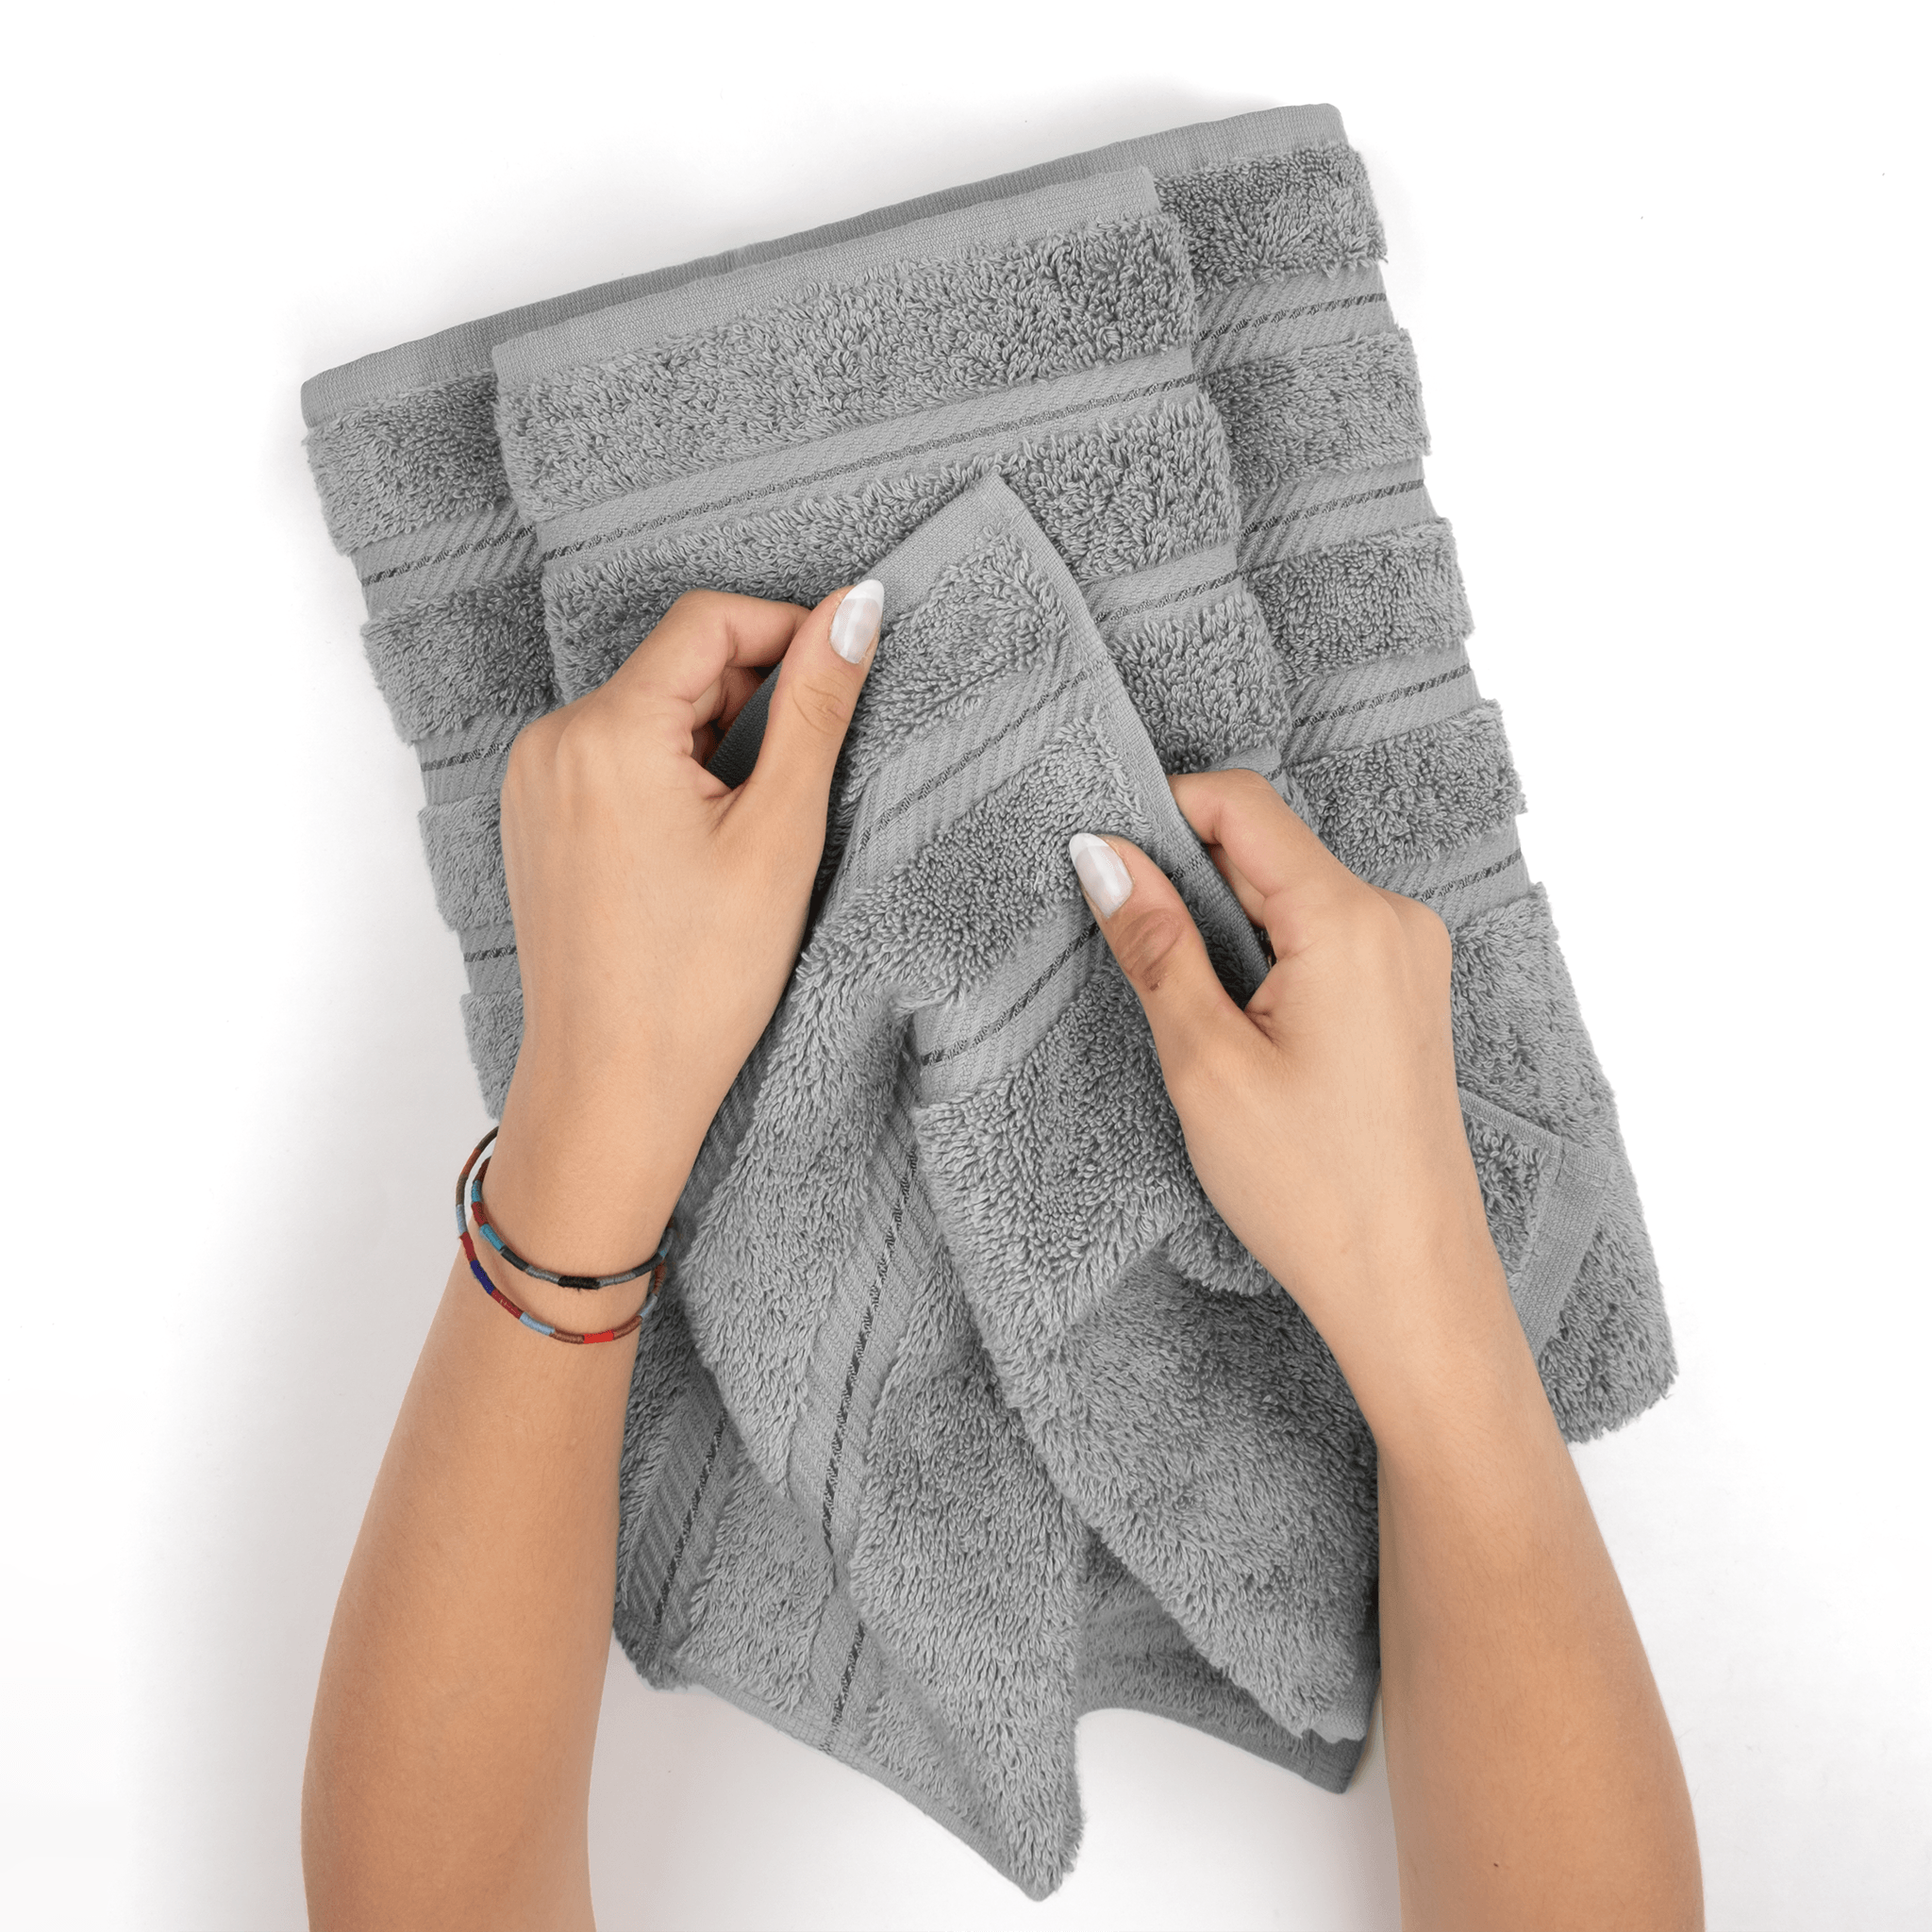 Home Decorators Collection Turkish Cotton Ultra Soft Charcoal Gray 6-Piece  Bath Sheet Towel Set 6pcshhchr - The Home Depot